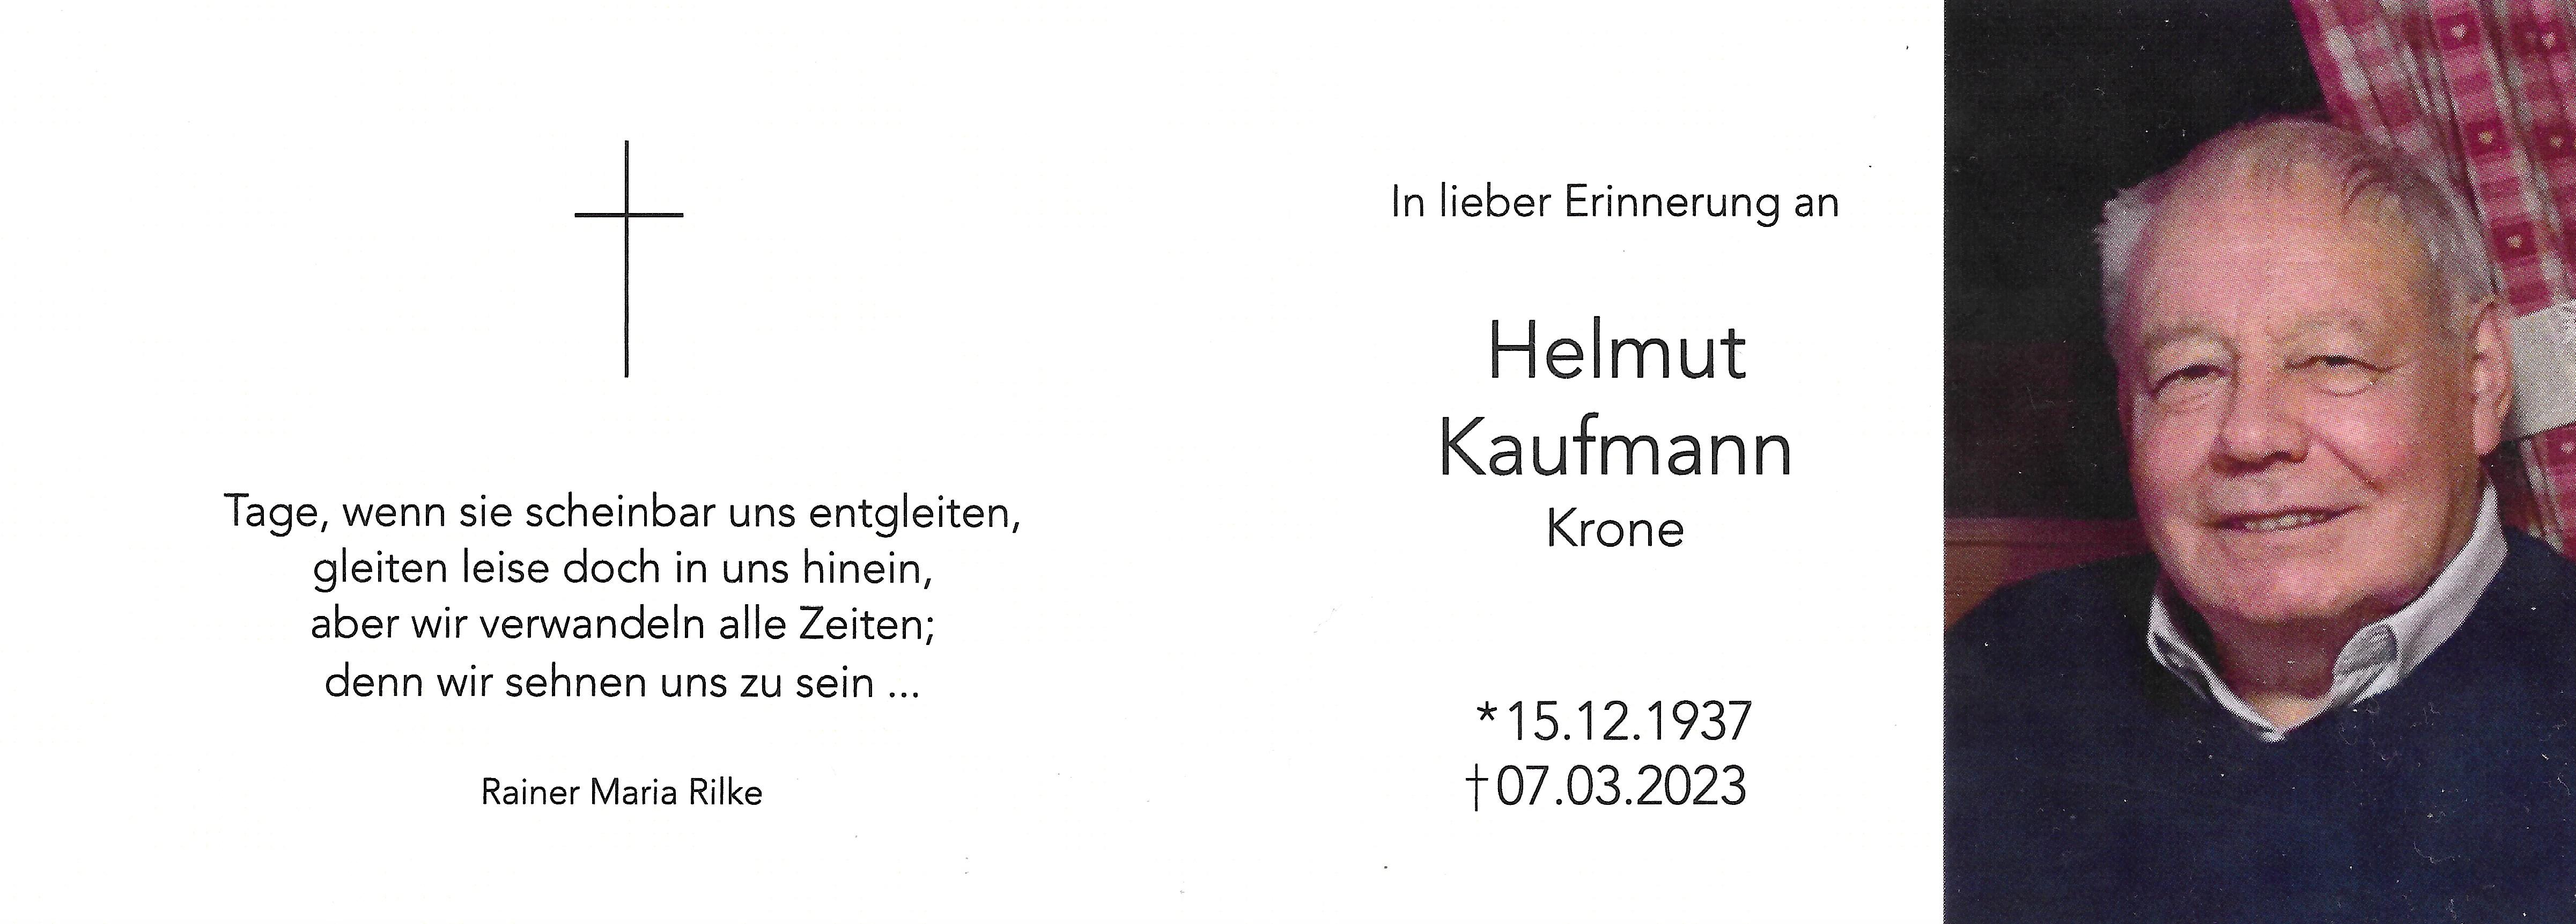 Helmut Kaufmann